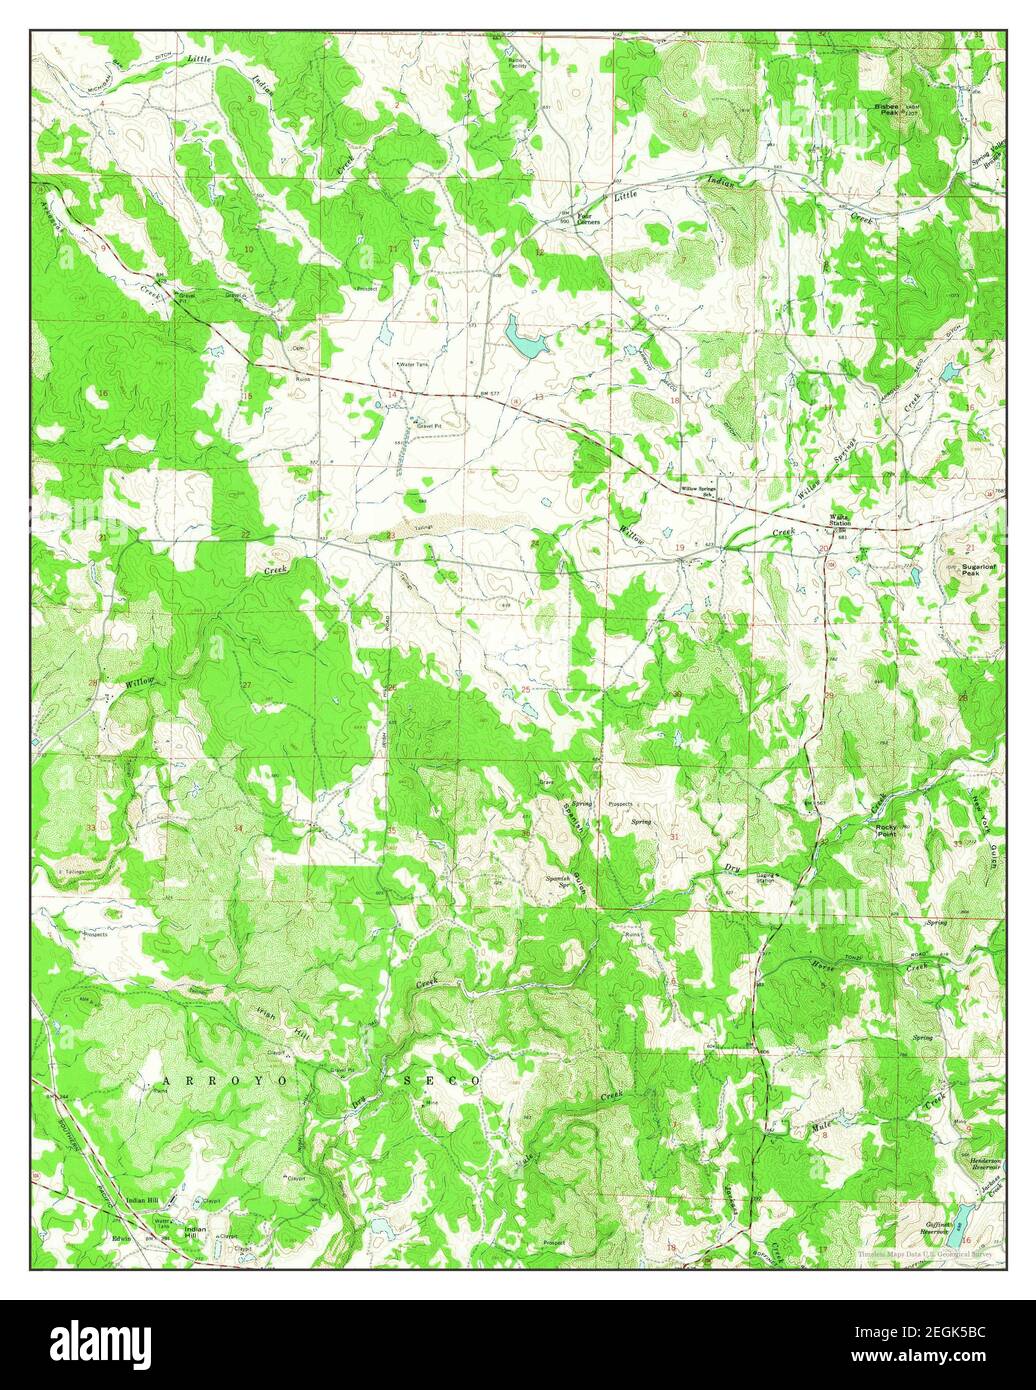 Irish Hill, California, map 1962, 1:24000, United States of America by Timeless Maps, data U.S. Geological Survey Stock Photo